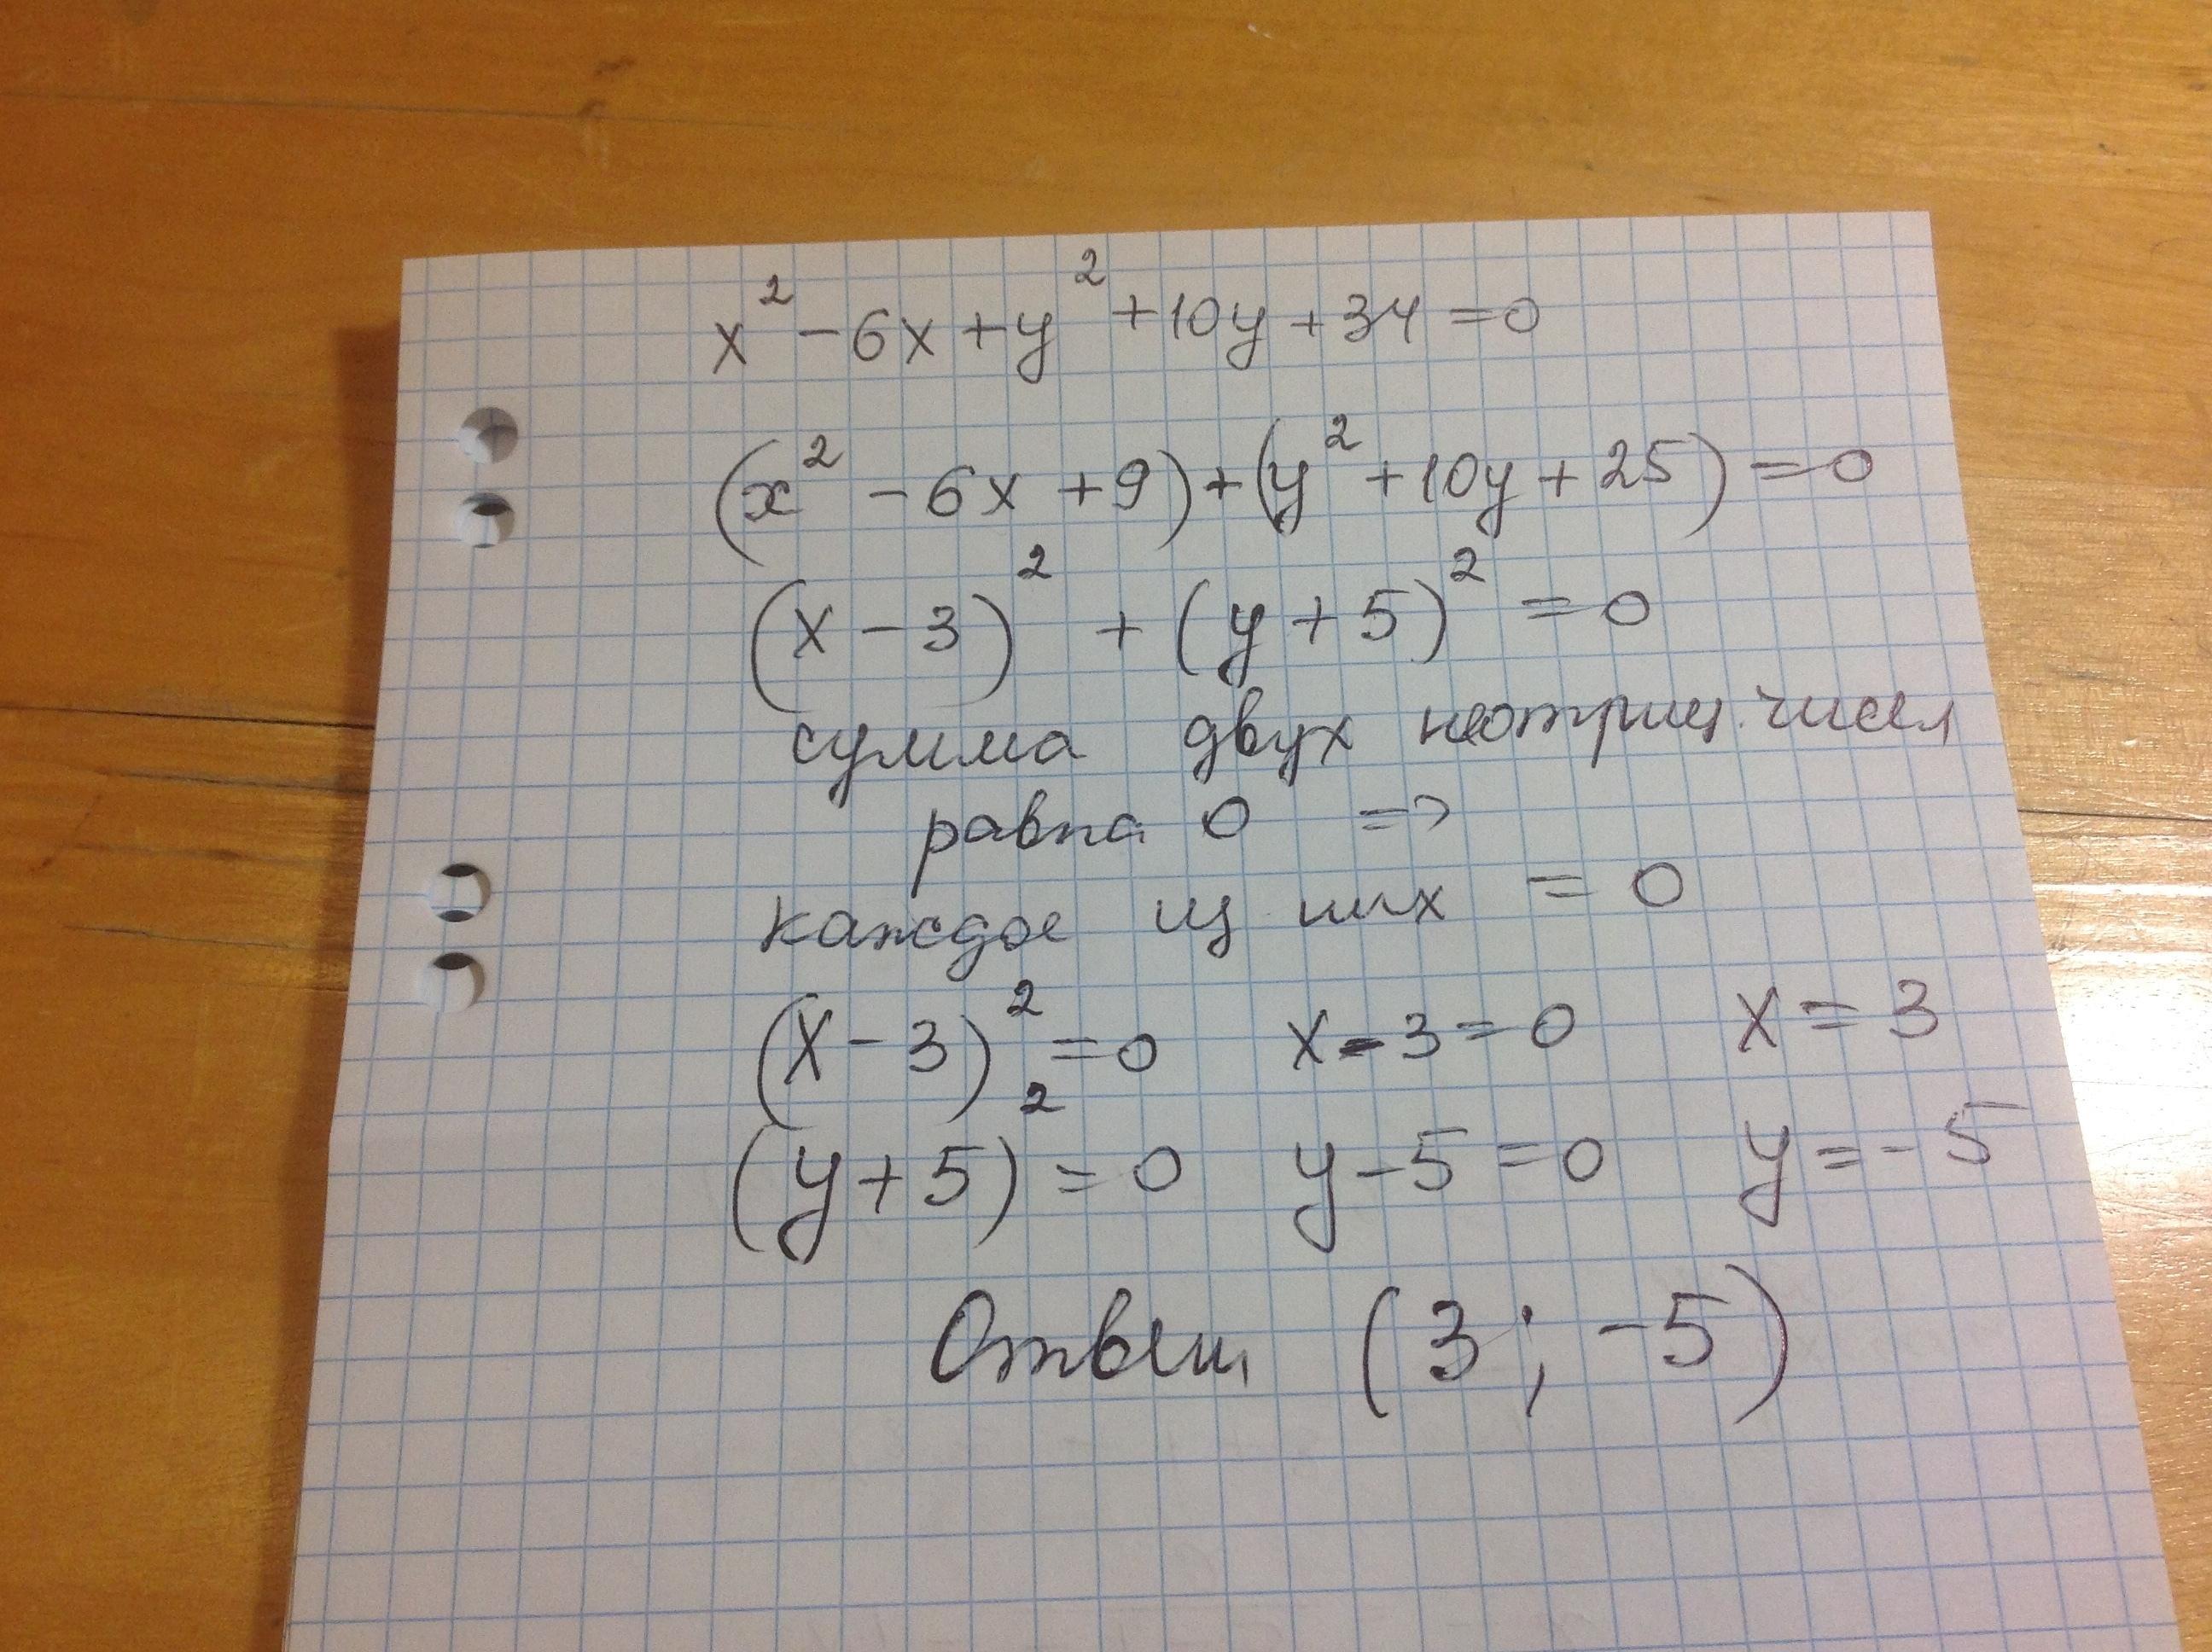 X2 4y 10. X 2 Y 2 10x 6y 34 0 решите уравнение. (X−6)2 <10−−√(X−6) .. X2 + y2 − 2x + 6y + 10 = 0.. -2x^2-3x+34>0.